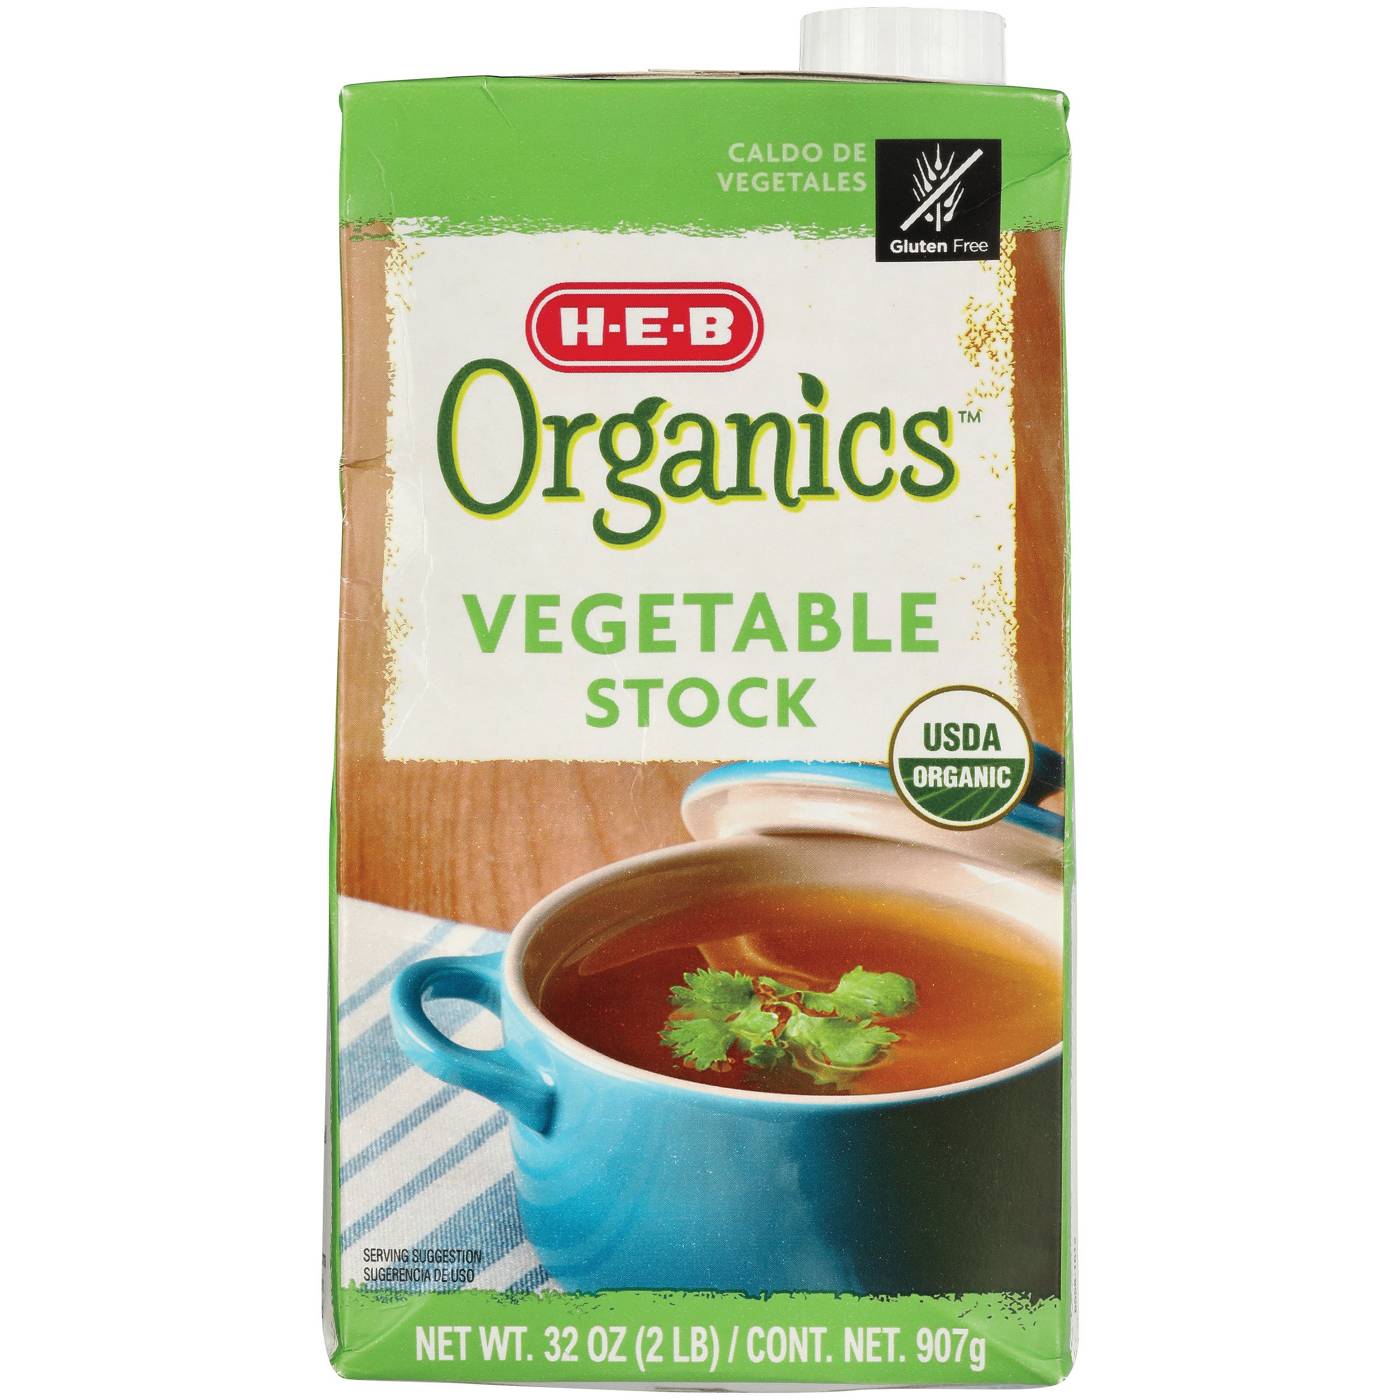 H-E-B Organics Vegetable Stock; image 2 of 2